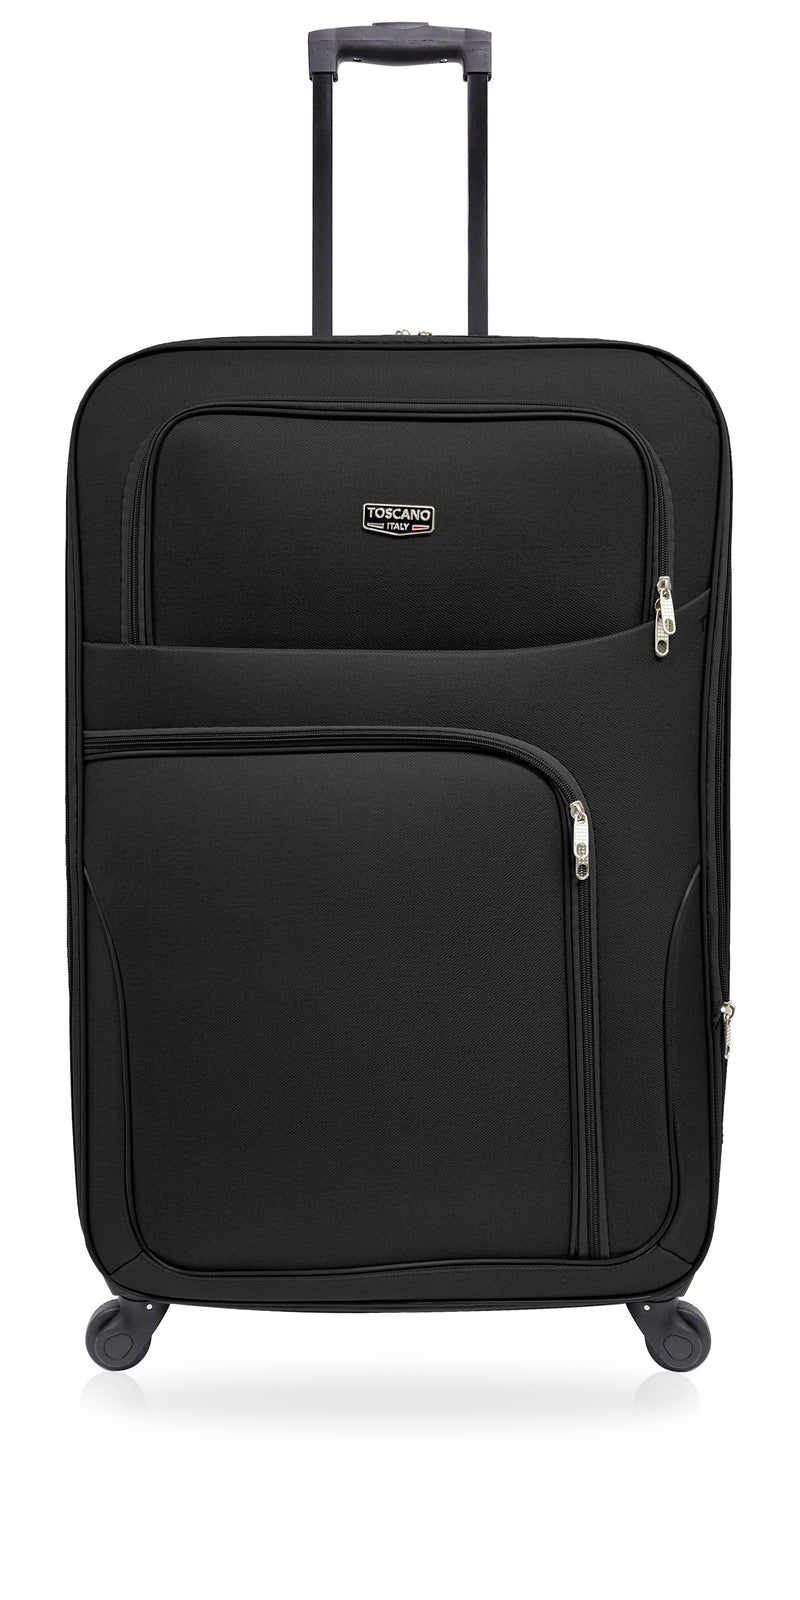 TOSCANO by Tucci Allacciare 4-pc (20", 24", 28", 32") Expandable Suitcase Luggage Set